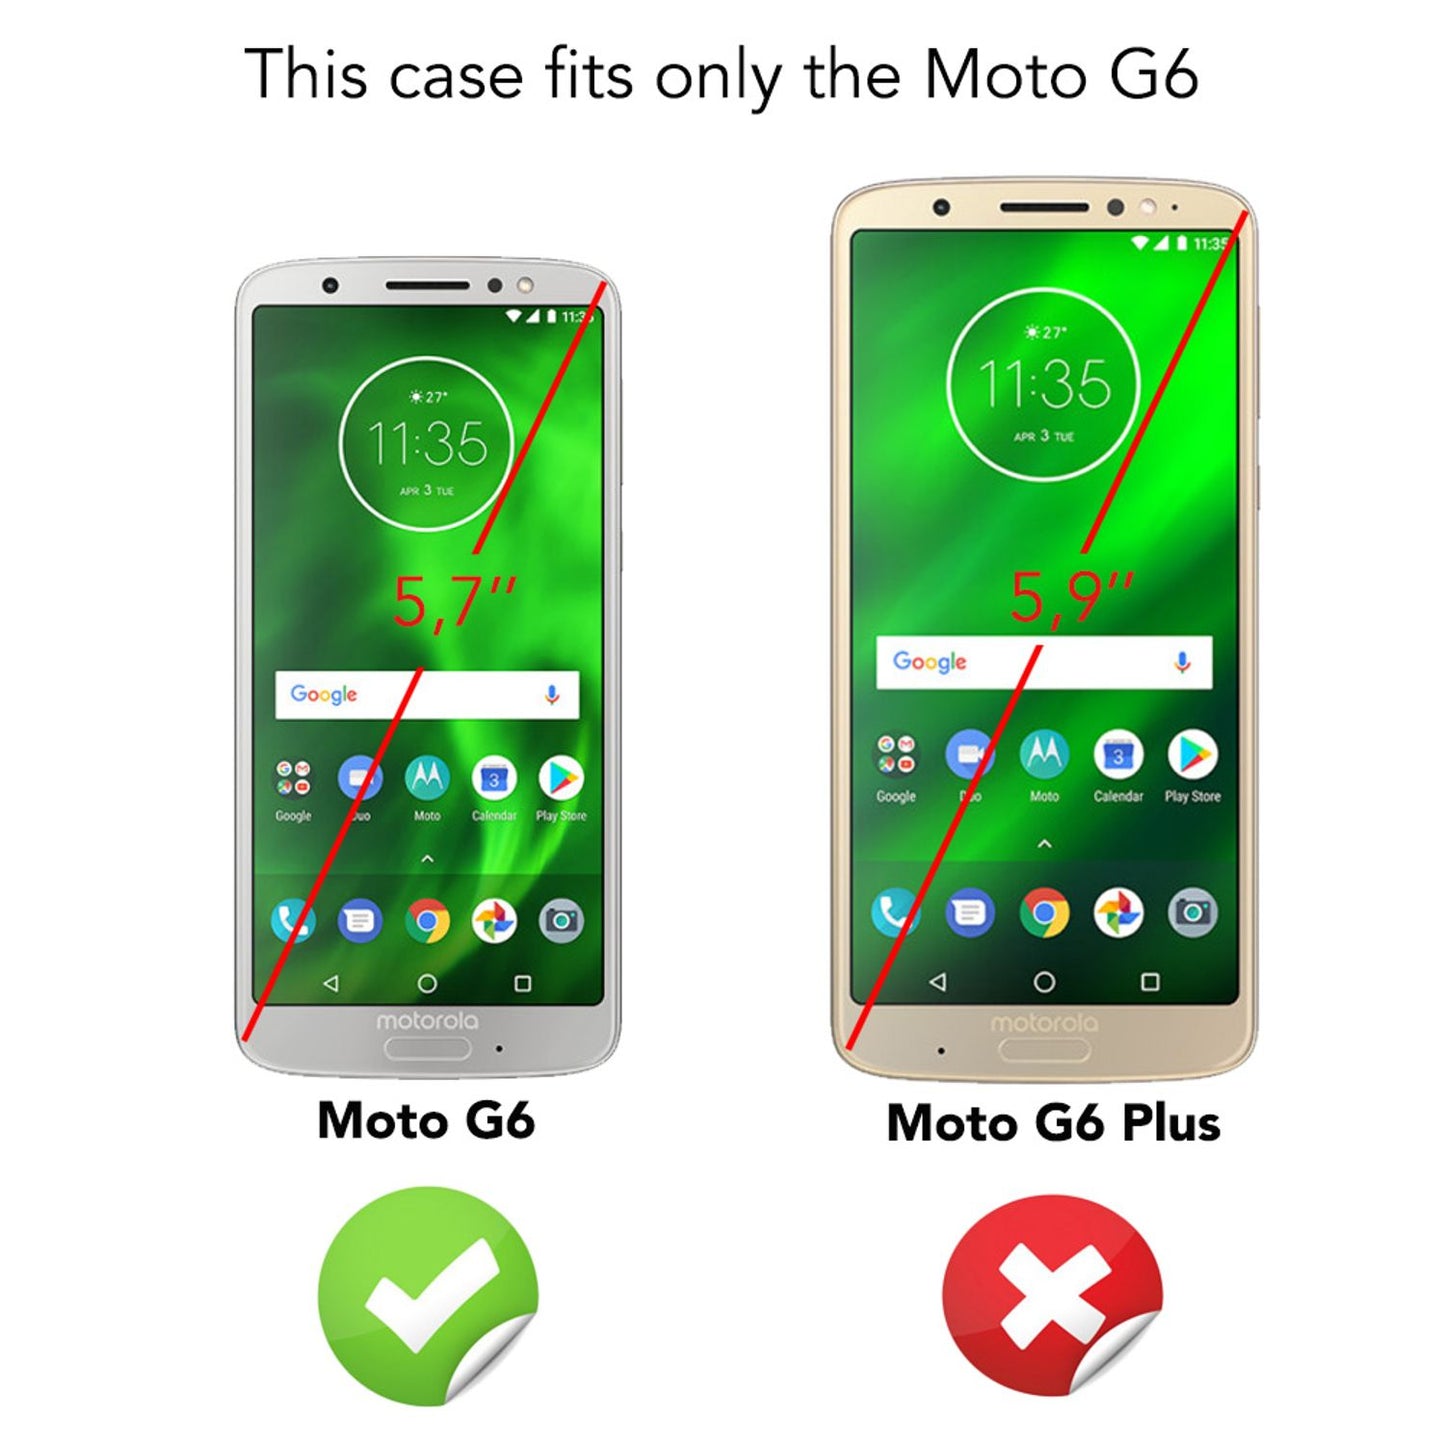 NALIA Handy Hülle für Motorola Moto G6, Ultra Slim Silikon Case Cover TPU Bumper